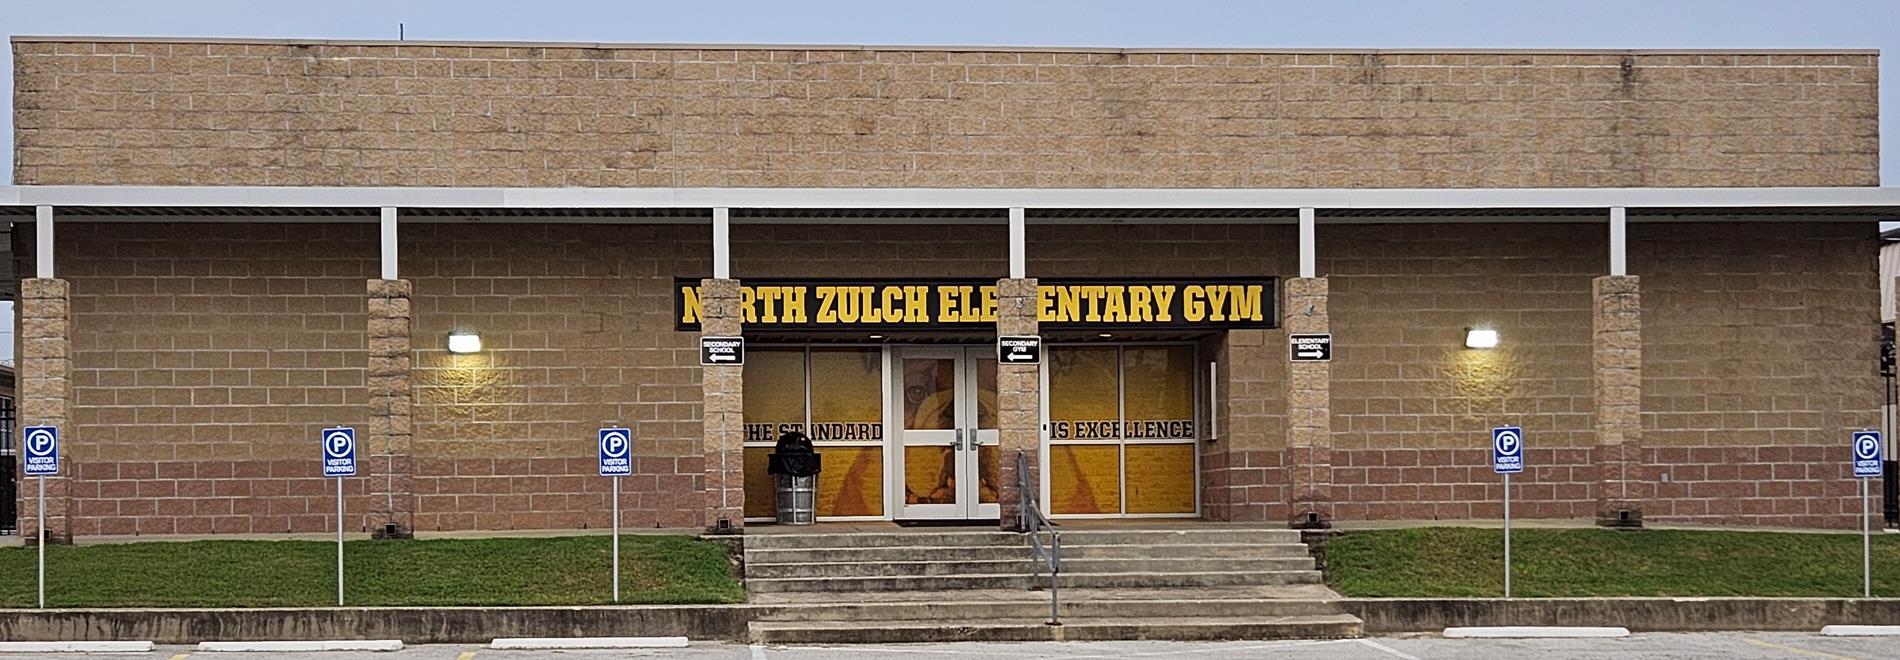 North Zulch Elementary Gym